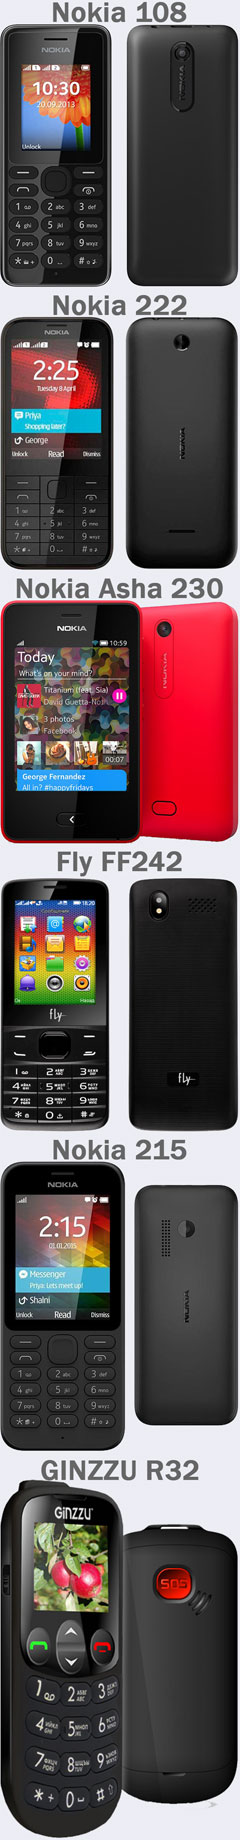 Nokia 108, Nokia 222, Nokia Asha 230, Fly FF242, Nokia 215, GINZZU R32 - Телефон для ребенка. Какой телефон выбрать ребенку?